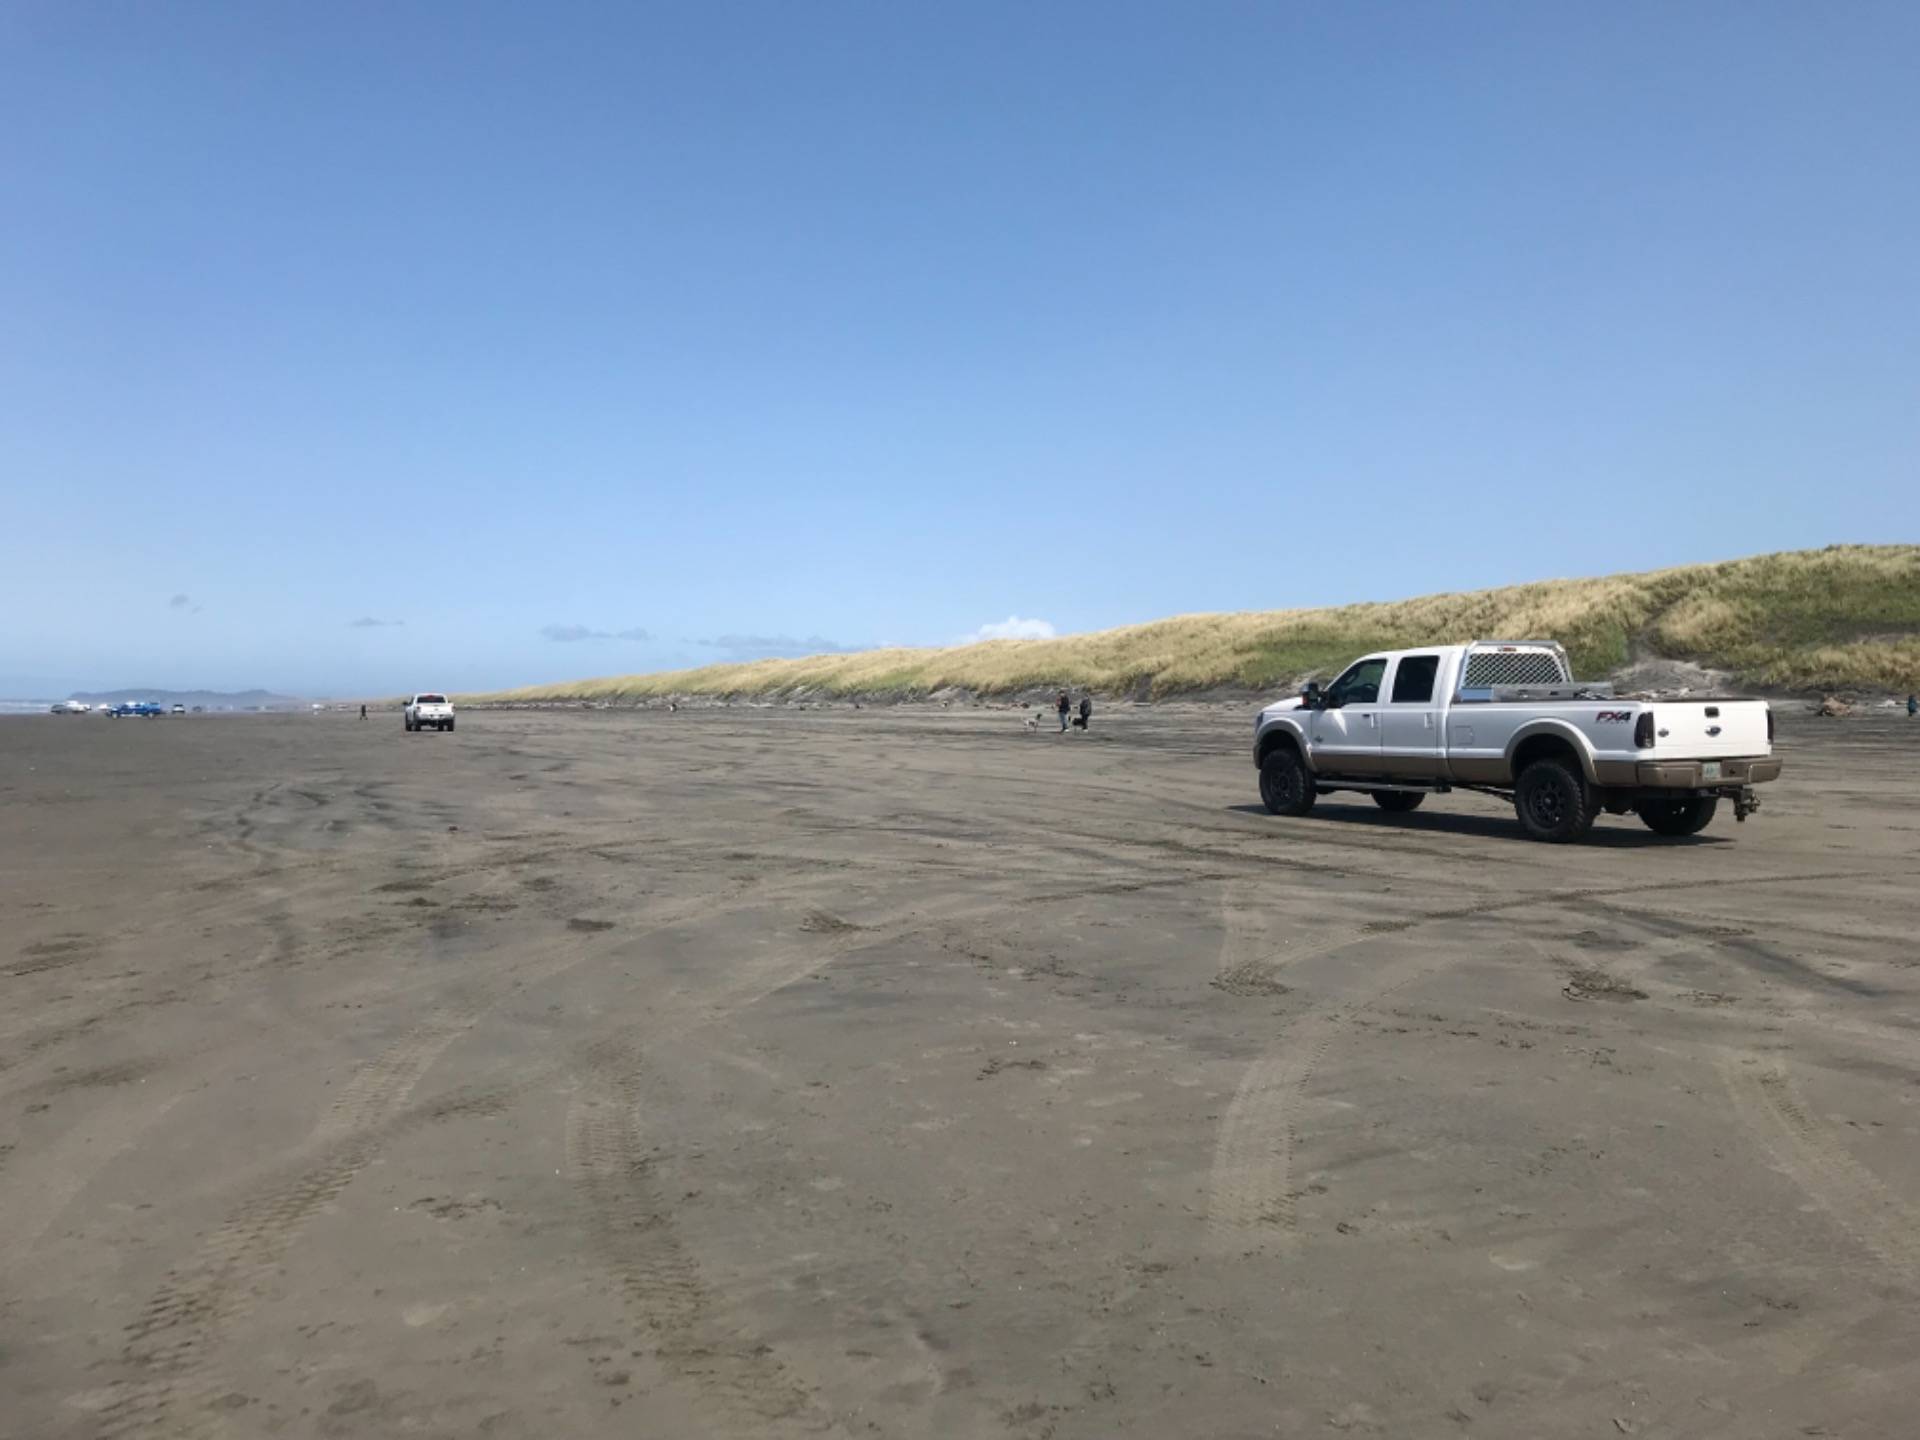 Trucks on the beach! Kind of cool, but I think I prefer my beaches vehicle free.